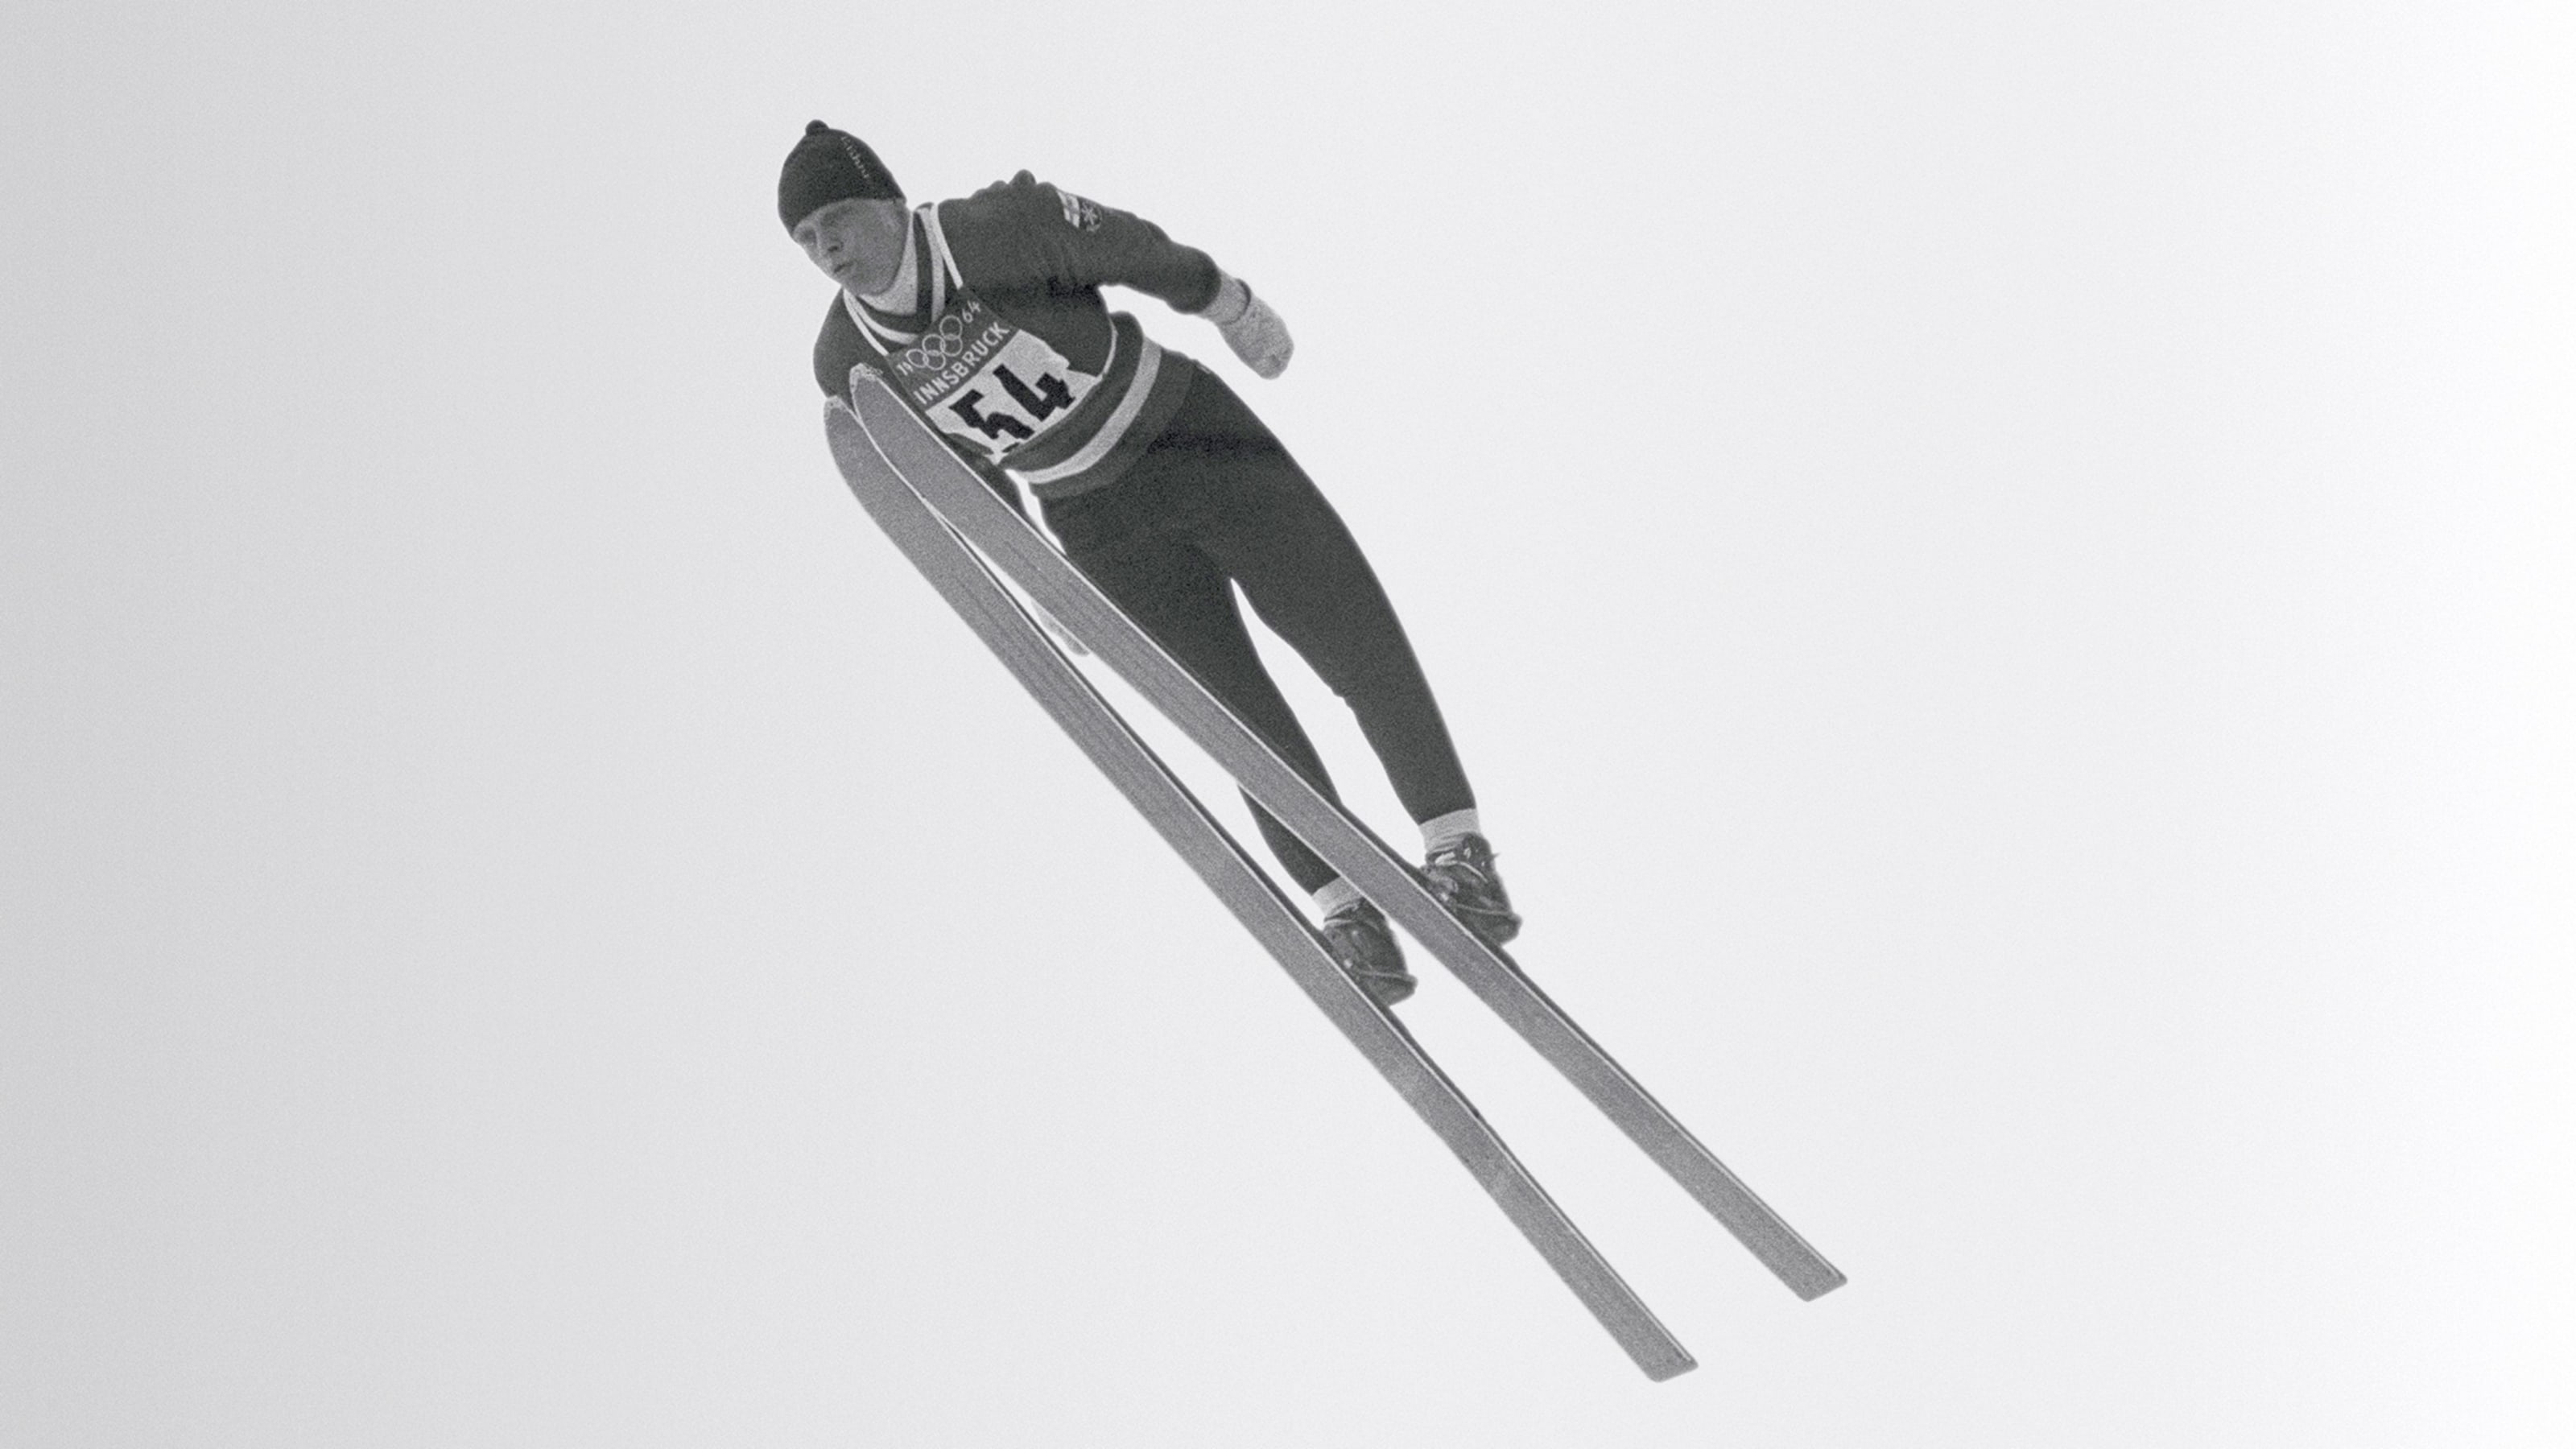 Первые прыжки с трамплина на лыжах. Трамплин Инсбрук 1964. Лыжный спорт прыжки с трамплина. Прыжки с трамплина 1924 Франция Шамони. Лыжи с трамплина.